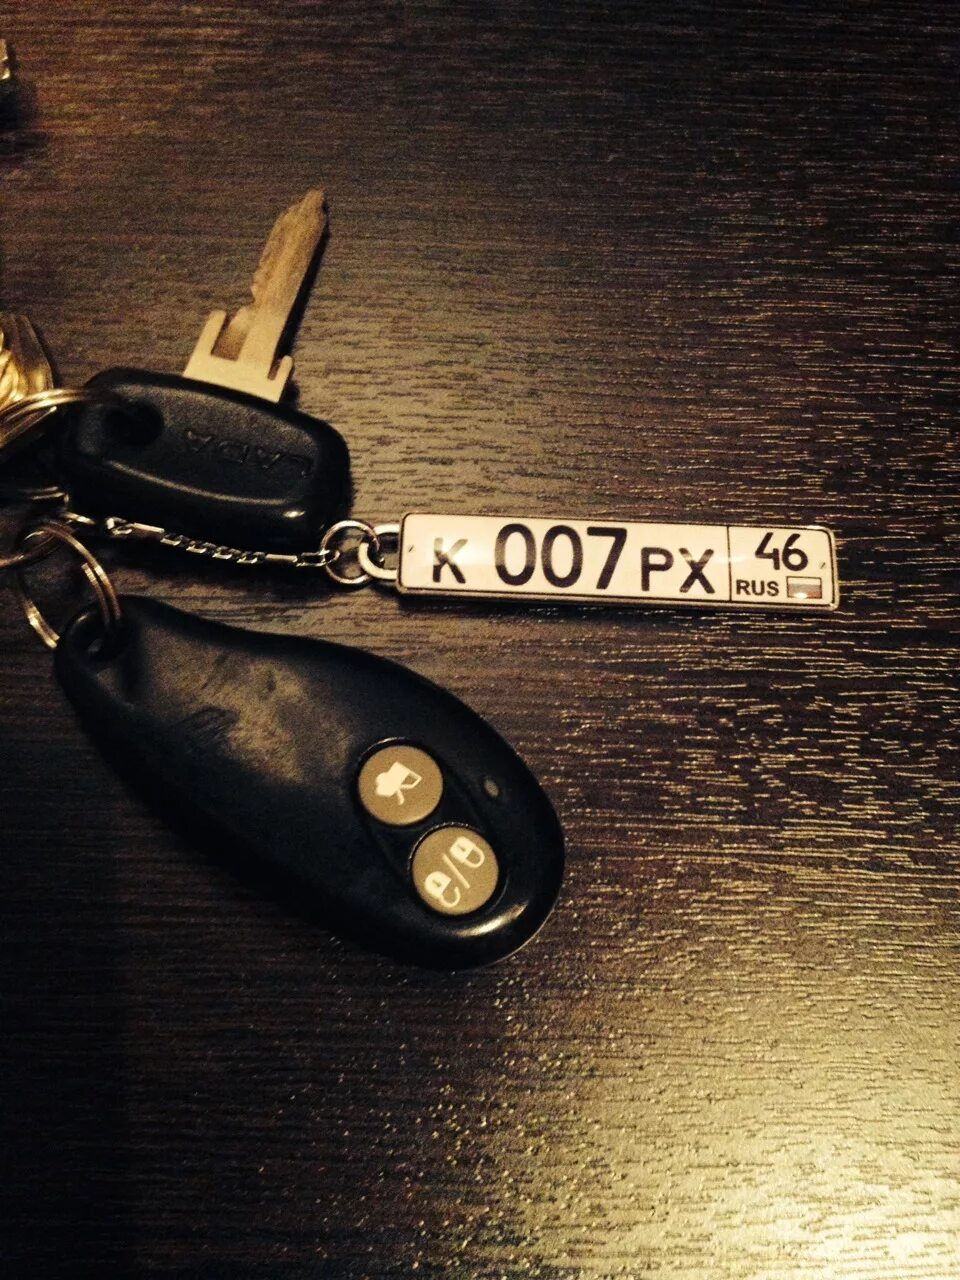 Брелок от ВАЗ 2107. Синий брелок ключ ВАЗ 2107. Брелок на ключи от машины ВАЗ 2107. Брелок для ключей ВАЗ 2107 С номером.